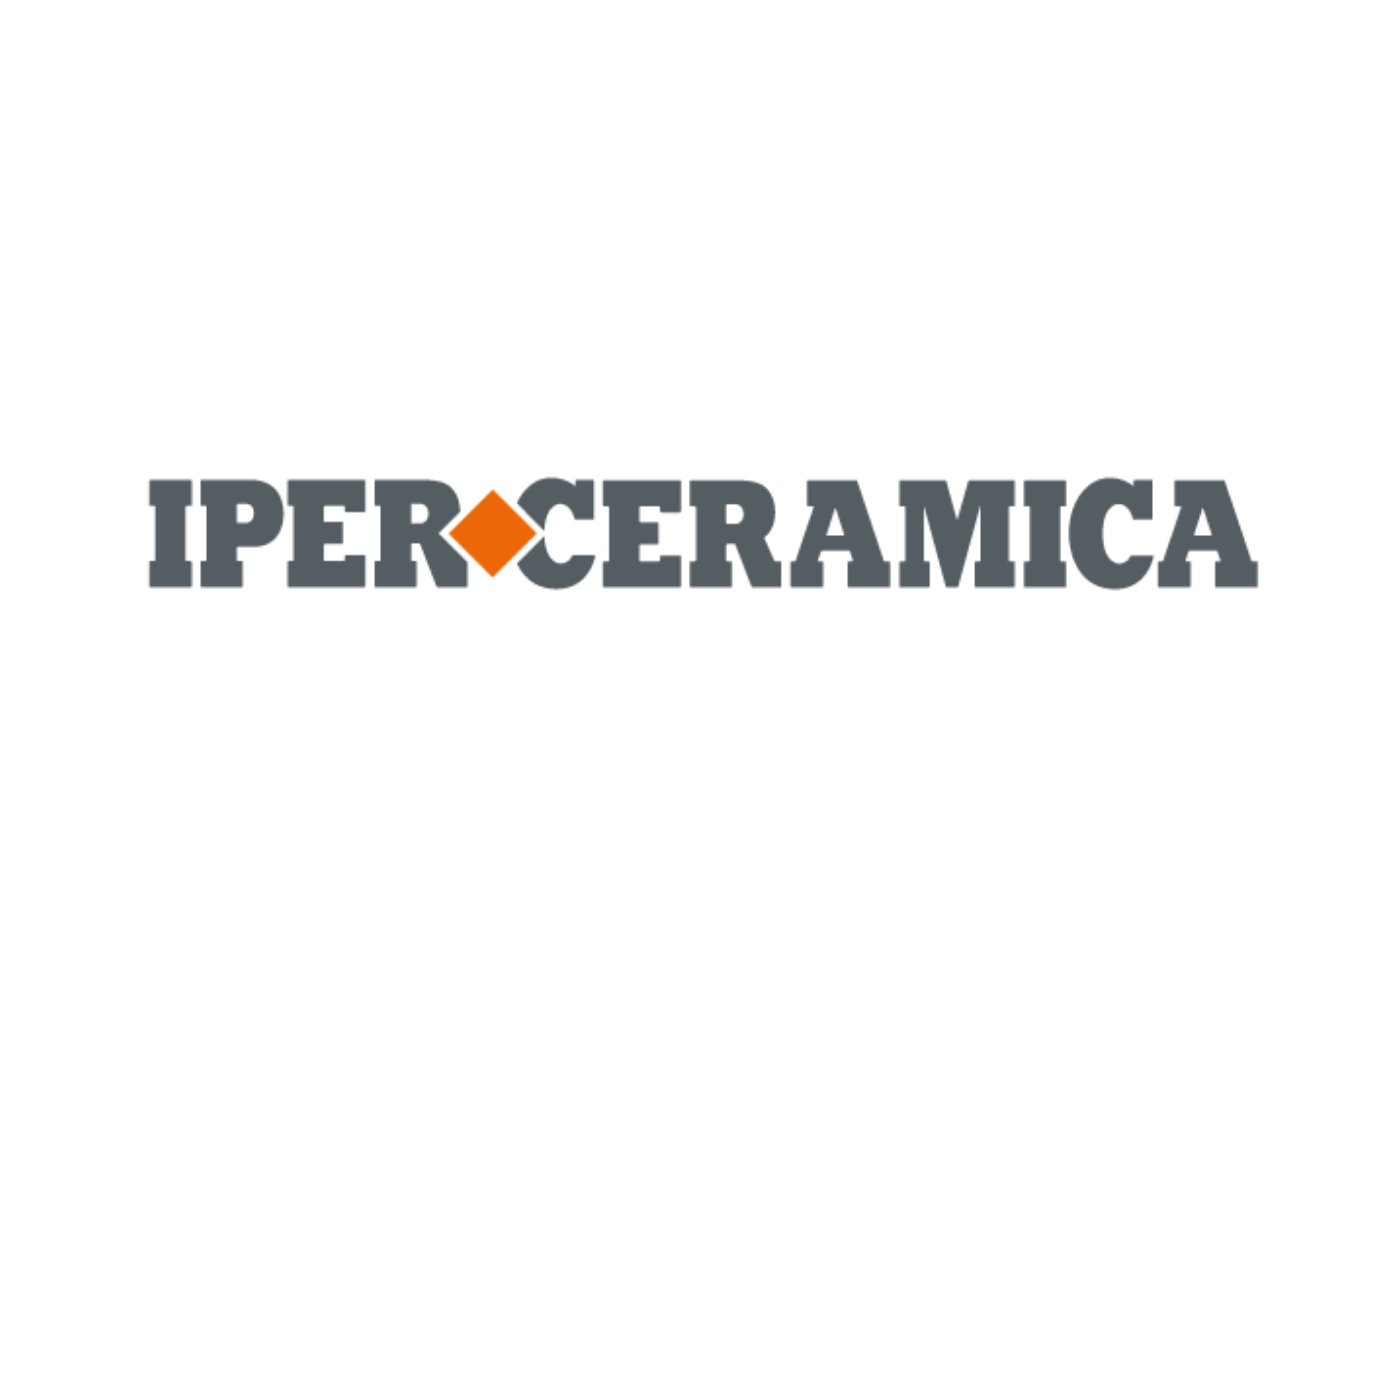 Iperceramica logo